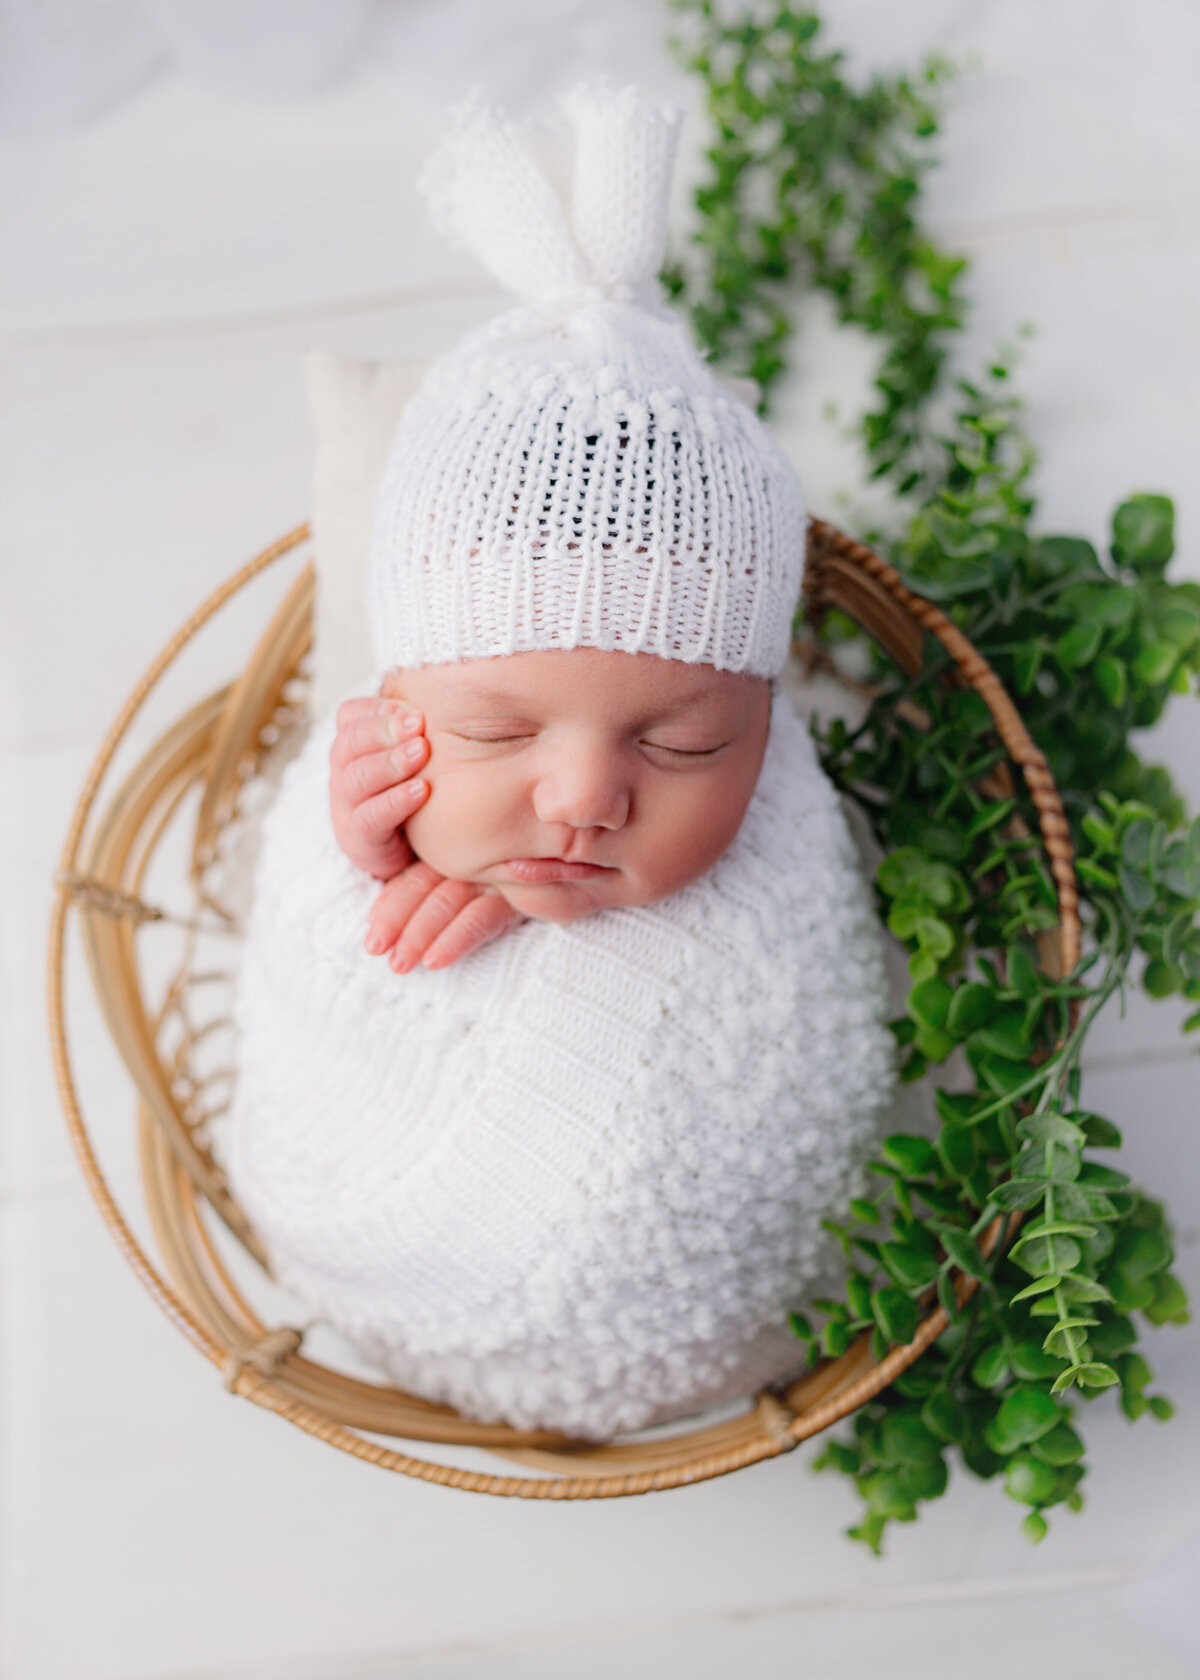 Newborn baby wrapped in white wrap sleeping in basket during newborn photoshoot in Mount Juliet t